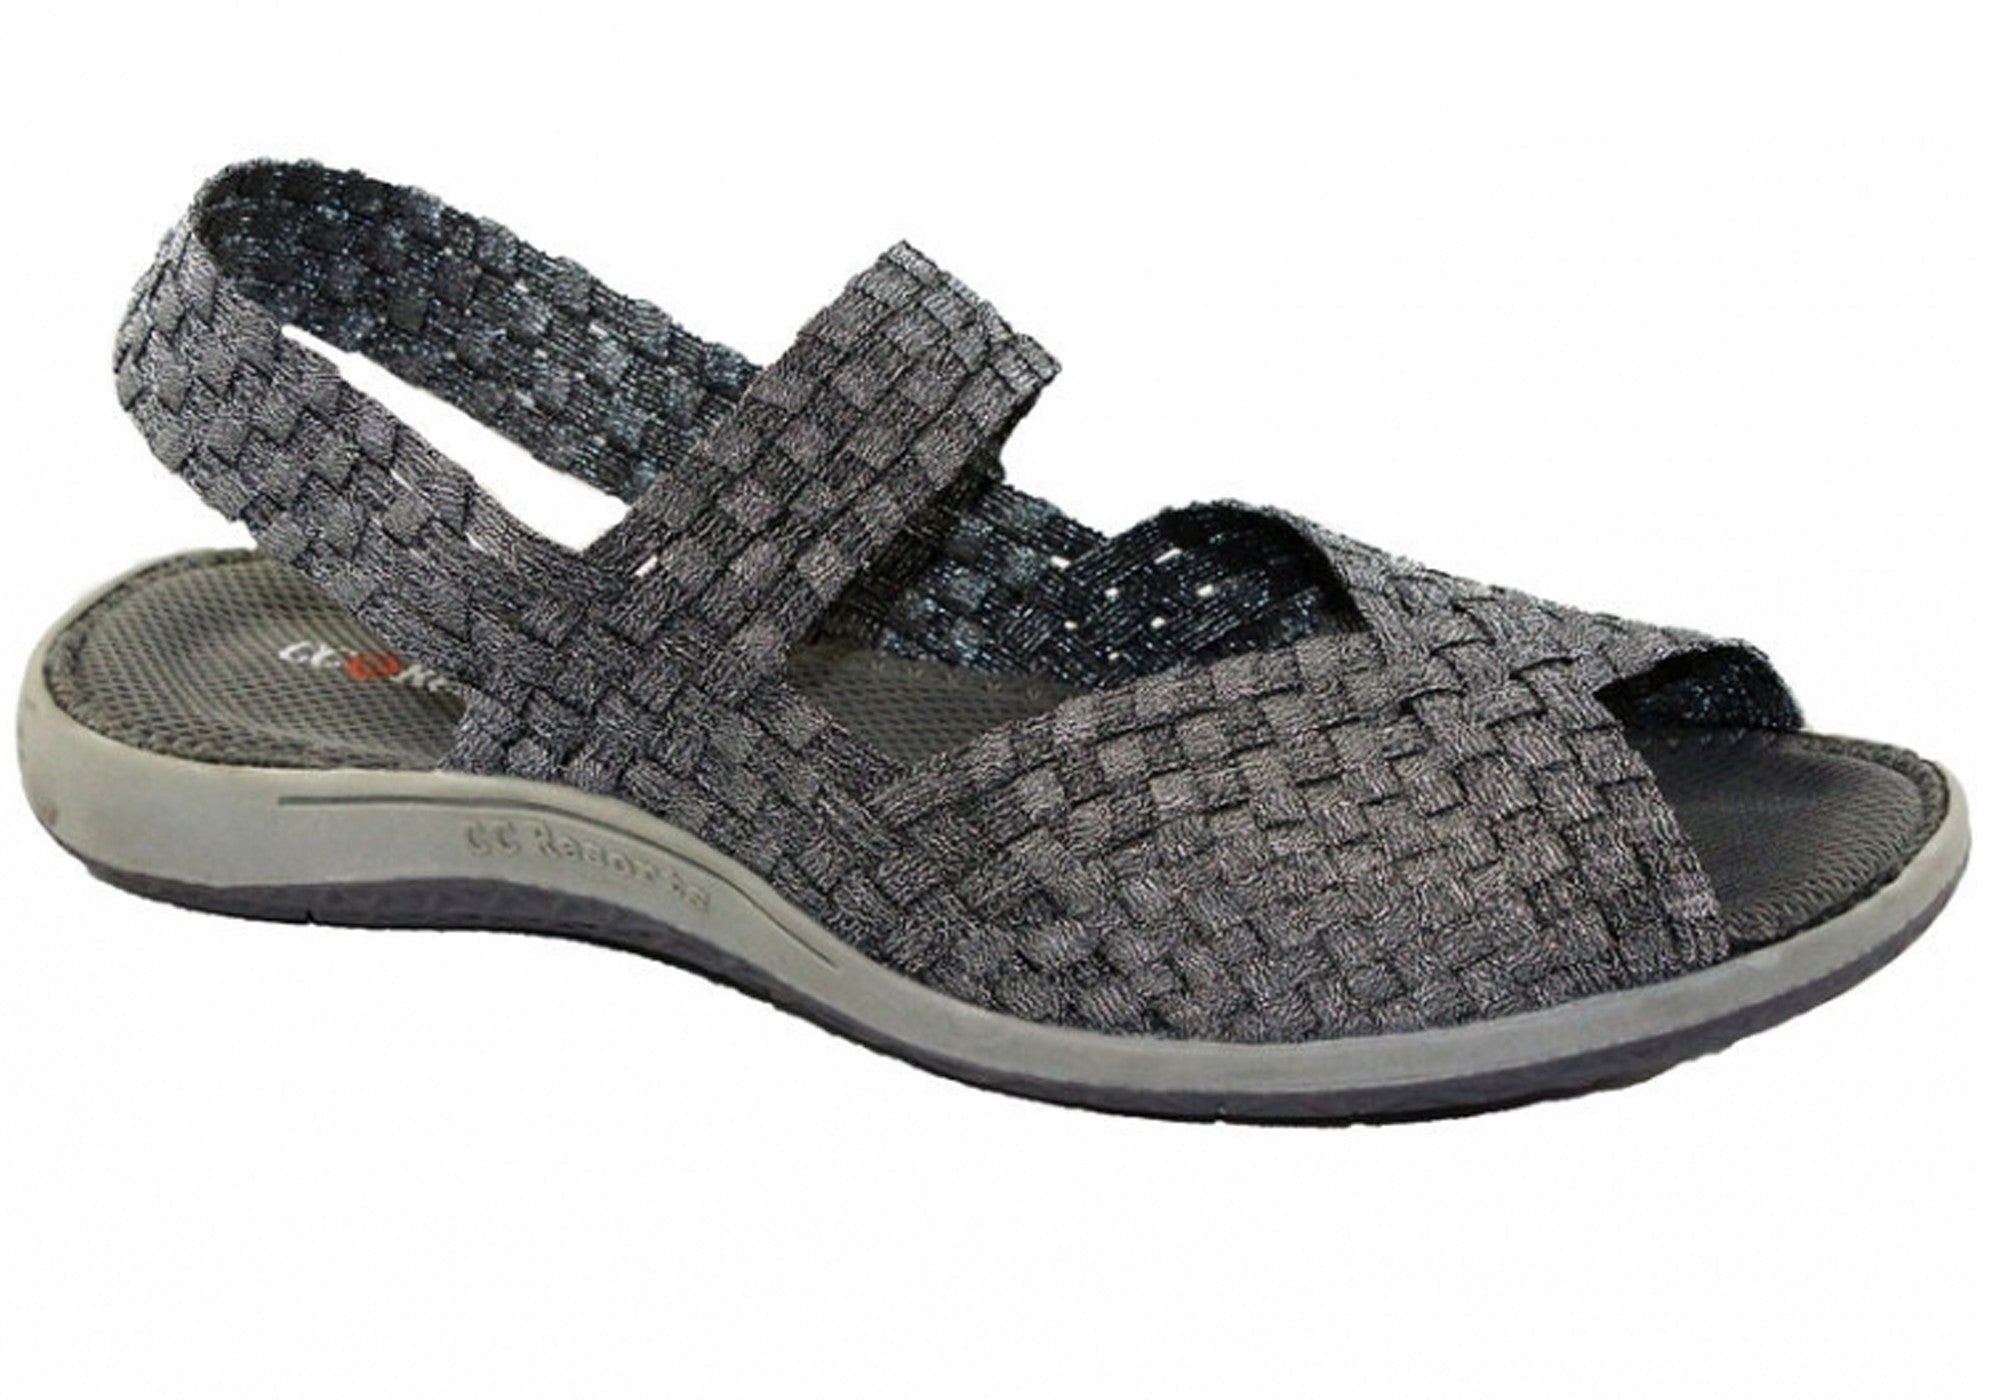 CC Resorts Peyton Womens Casual Peep Toe Shoes/Flats/Lightweight | eBay